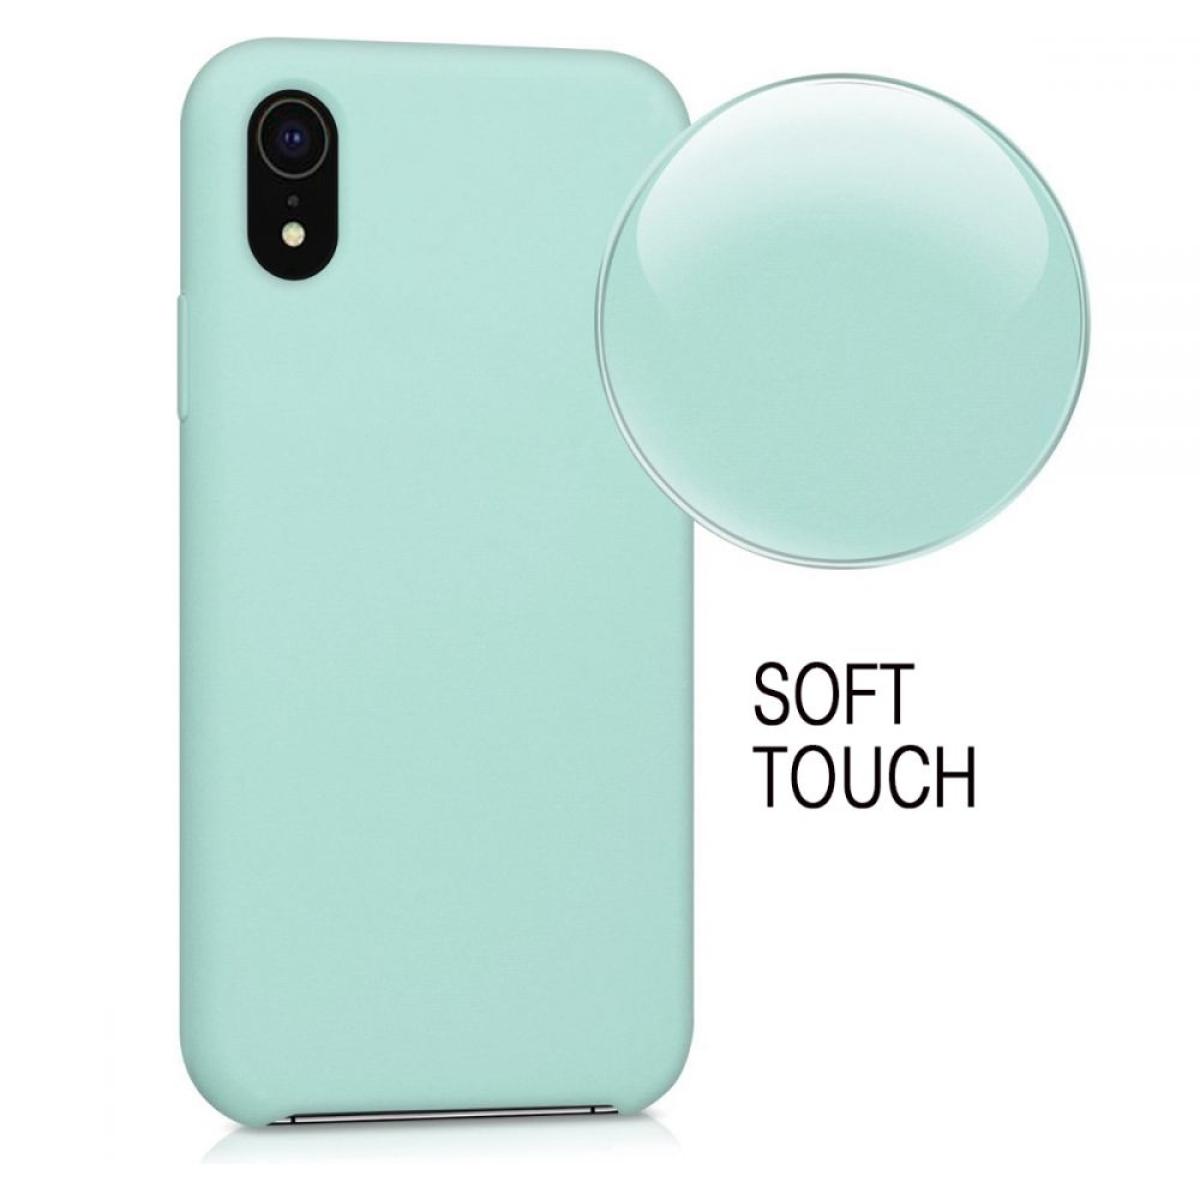 Coque iPhone Xr Silicone Liquide toucher doux, Anti Chocs Vert Pale